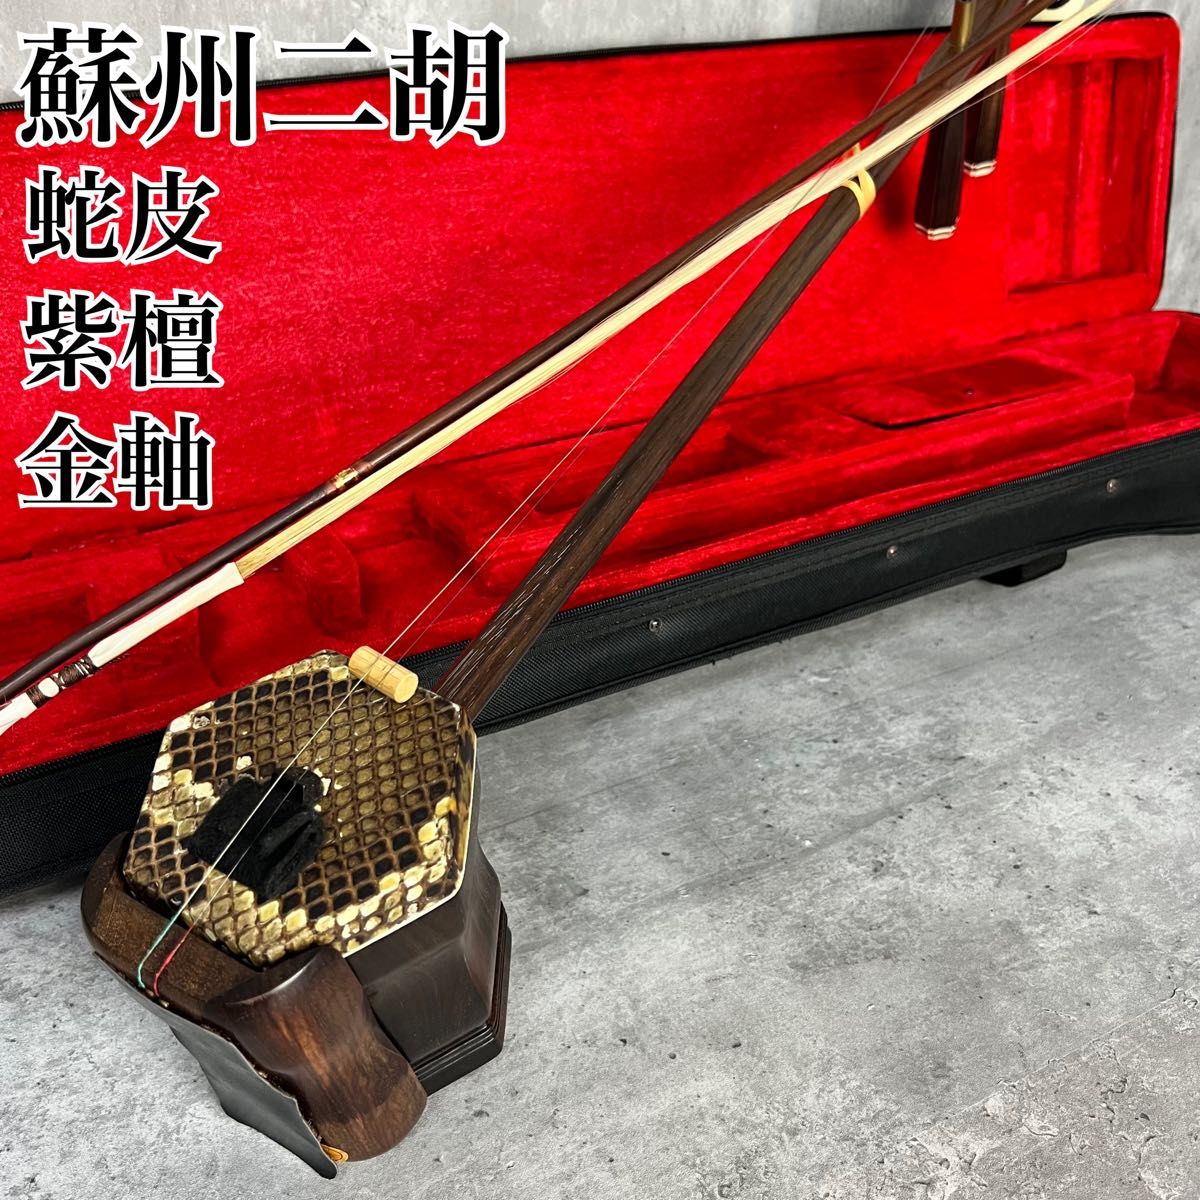 良品 上海民族楽器 敦煌牌 蘇州二胡 金属軸 蛇皮 レザー製ハードケース